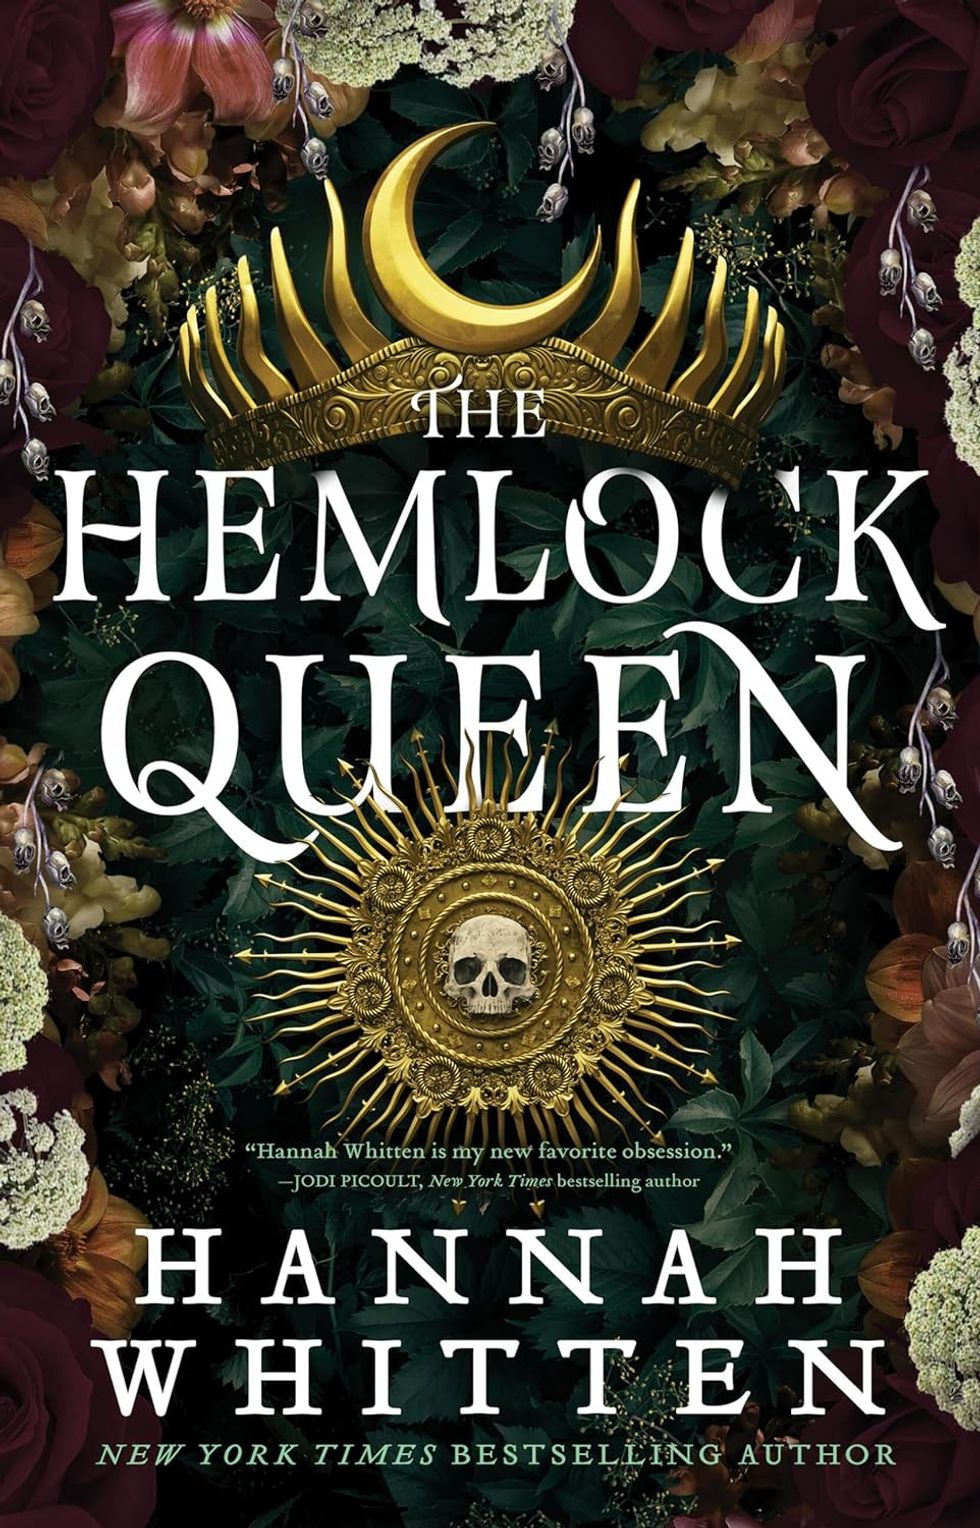 "The Hemlock Queen" by Hannah Whitten